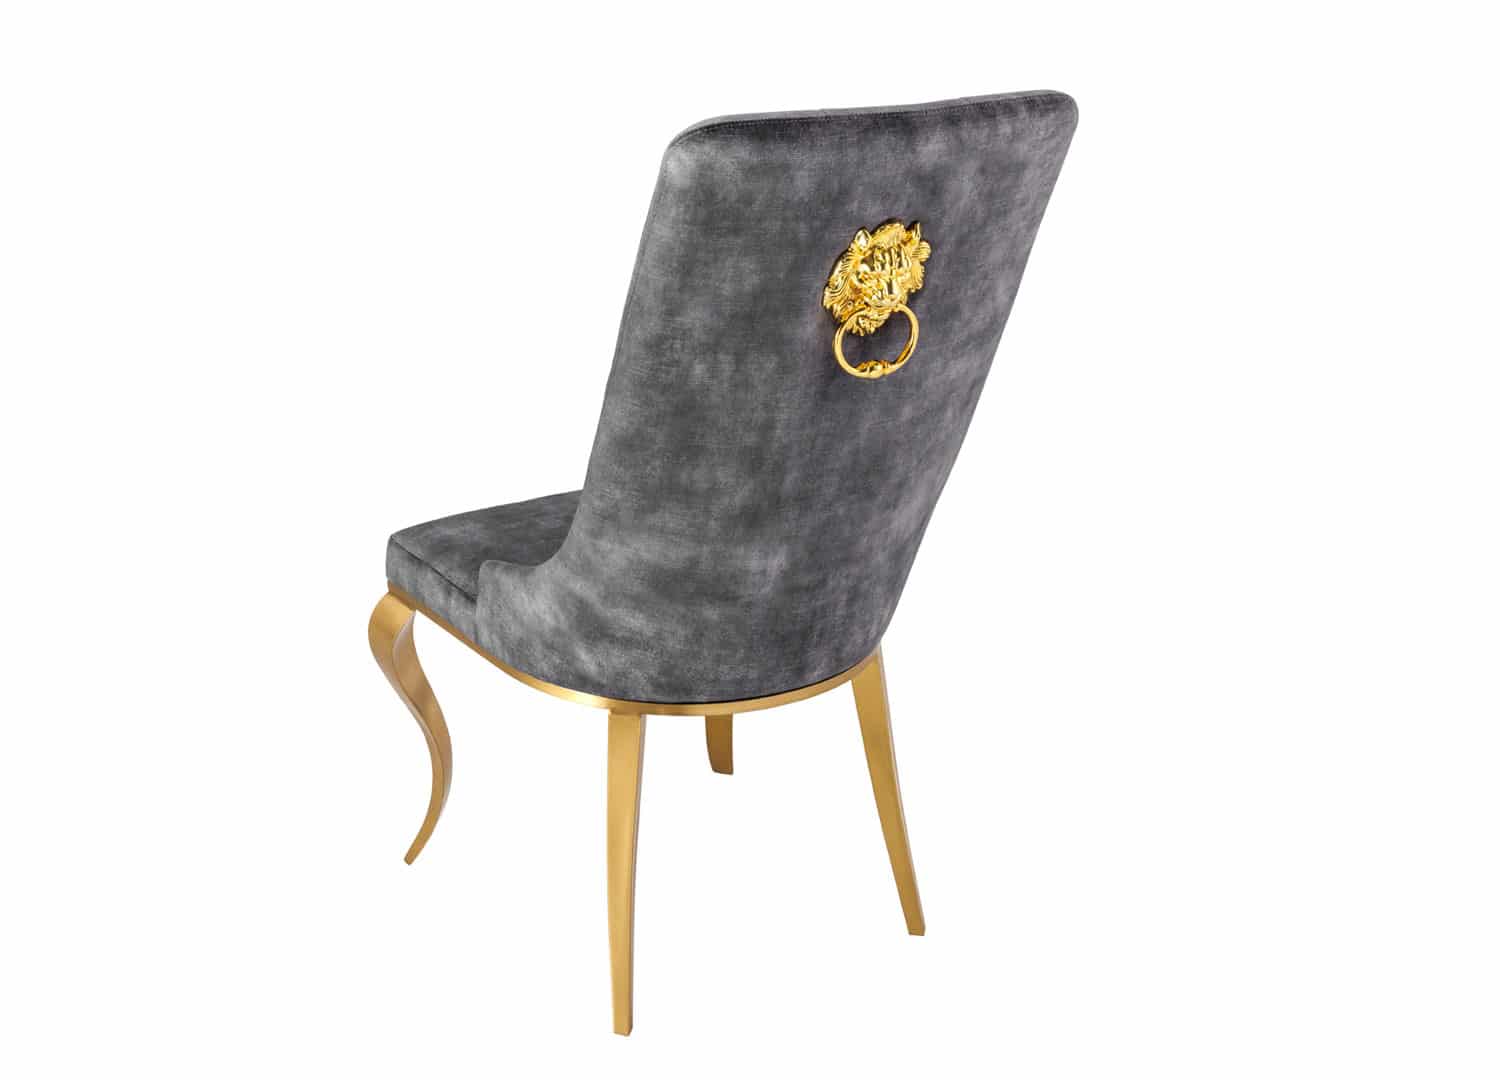 dos chaise baroque avec tete de lion